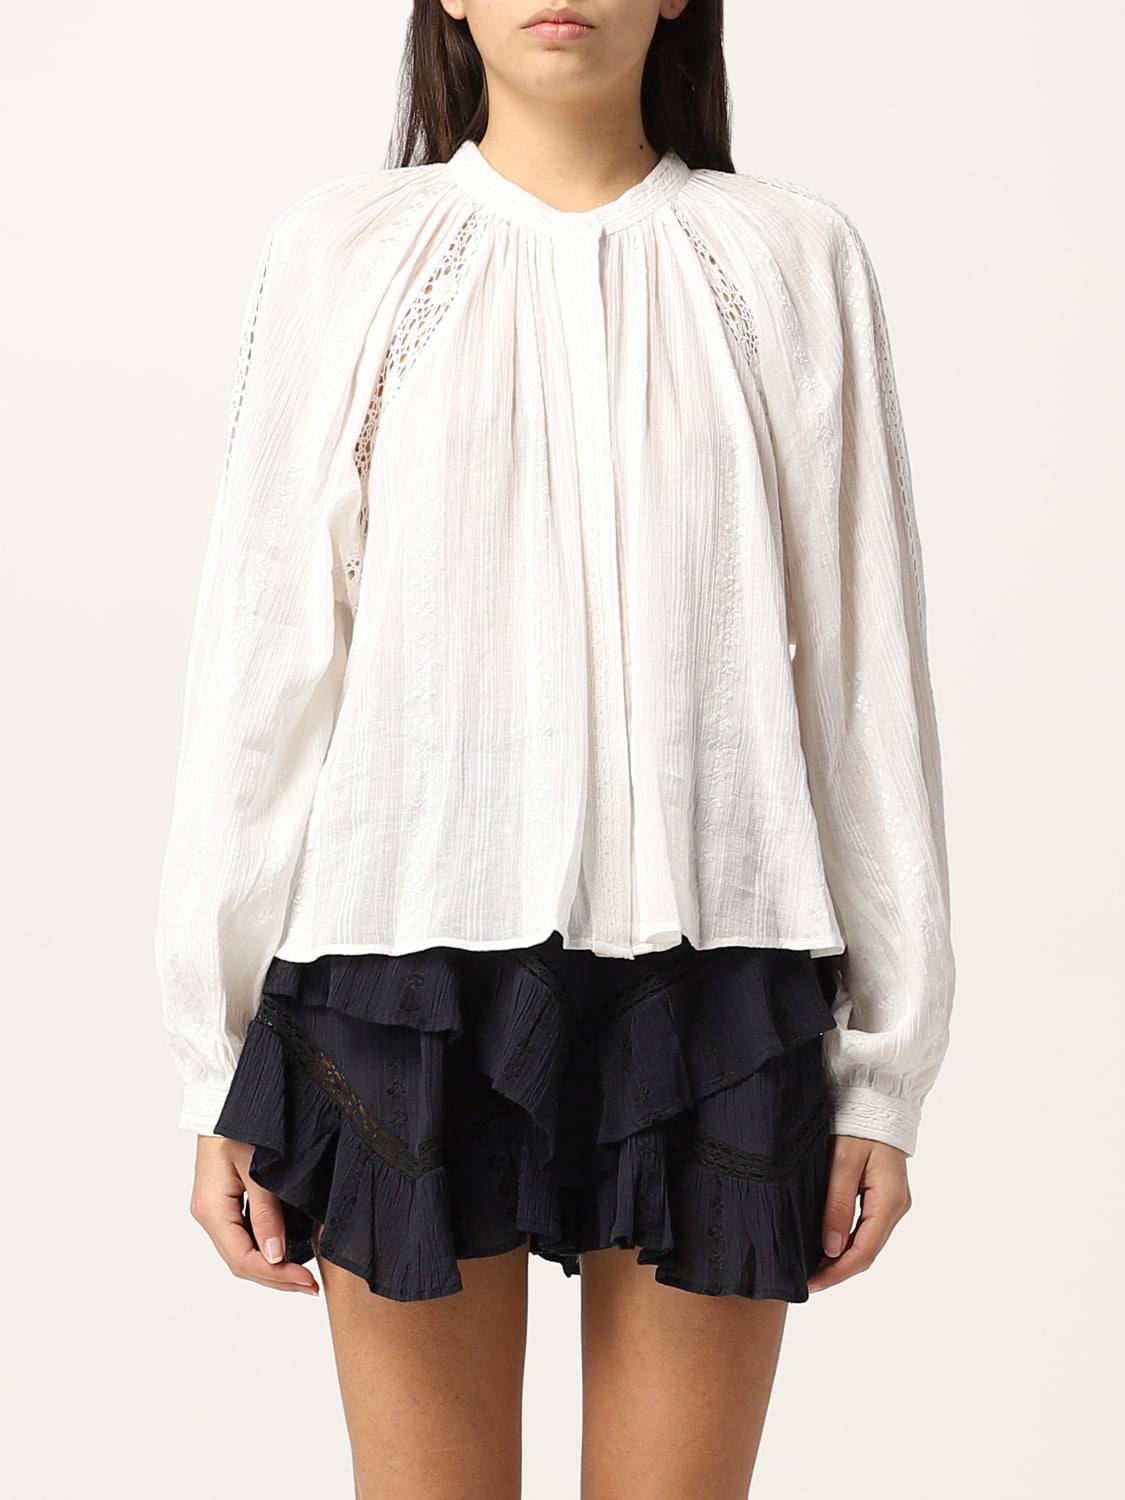 Janelle Isabel Marant Etoile blouse in cotton blend